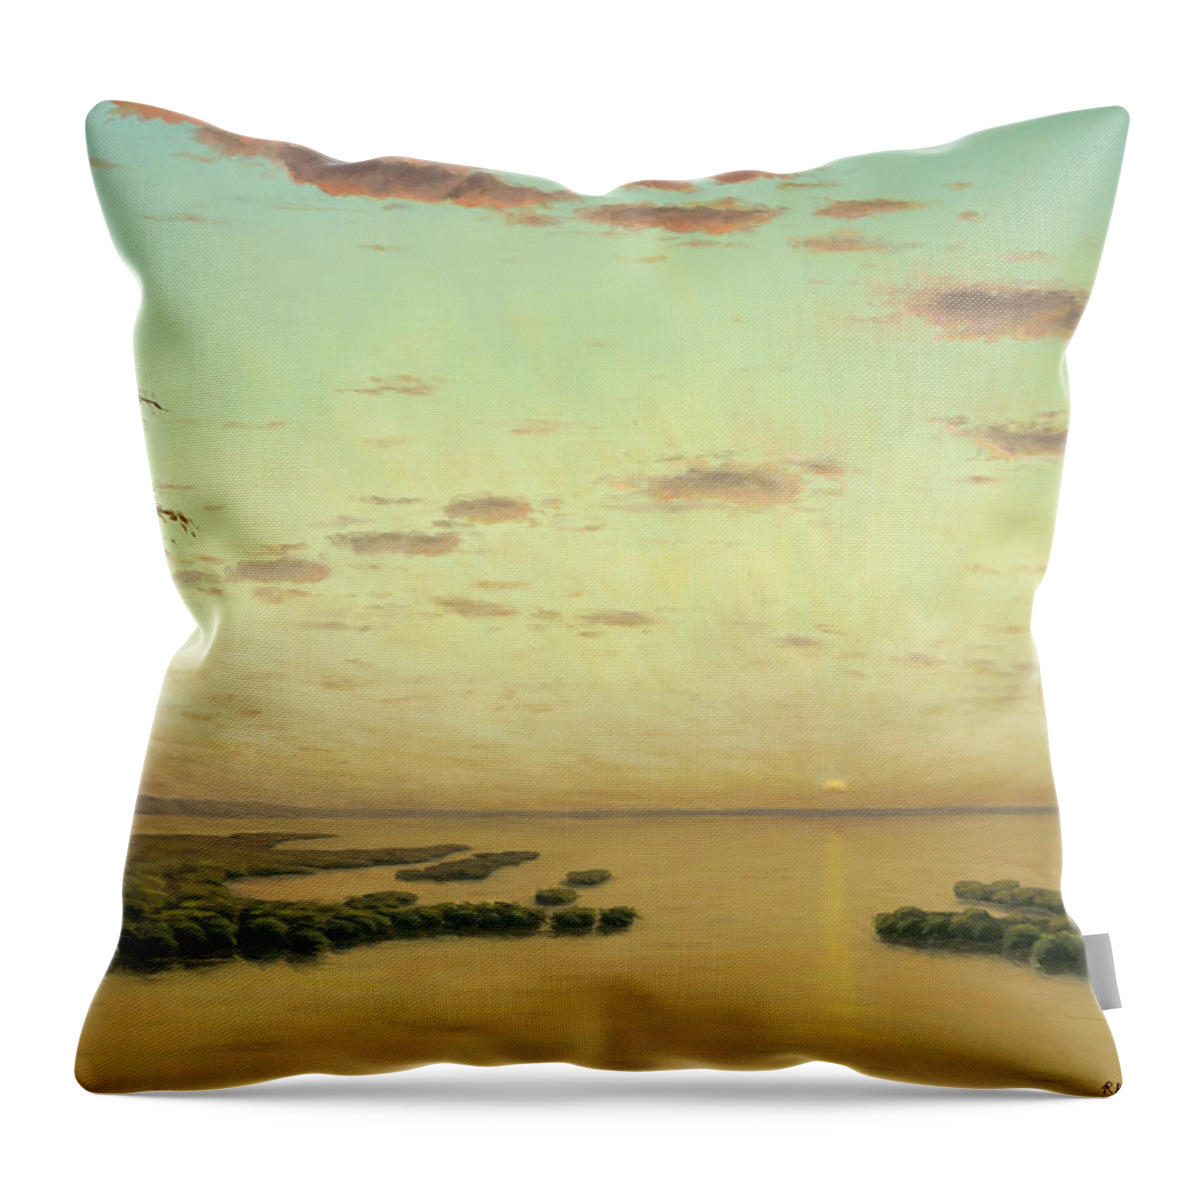 Landscape Throw Pillow featuring the painting Golden Sunset by Rick Hansen